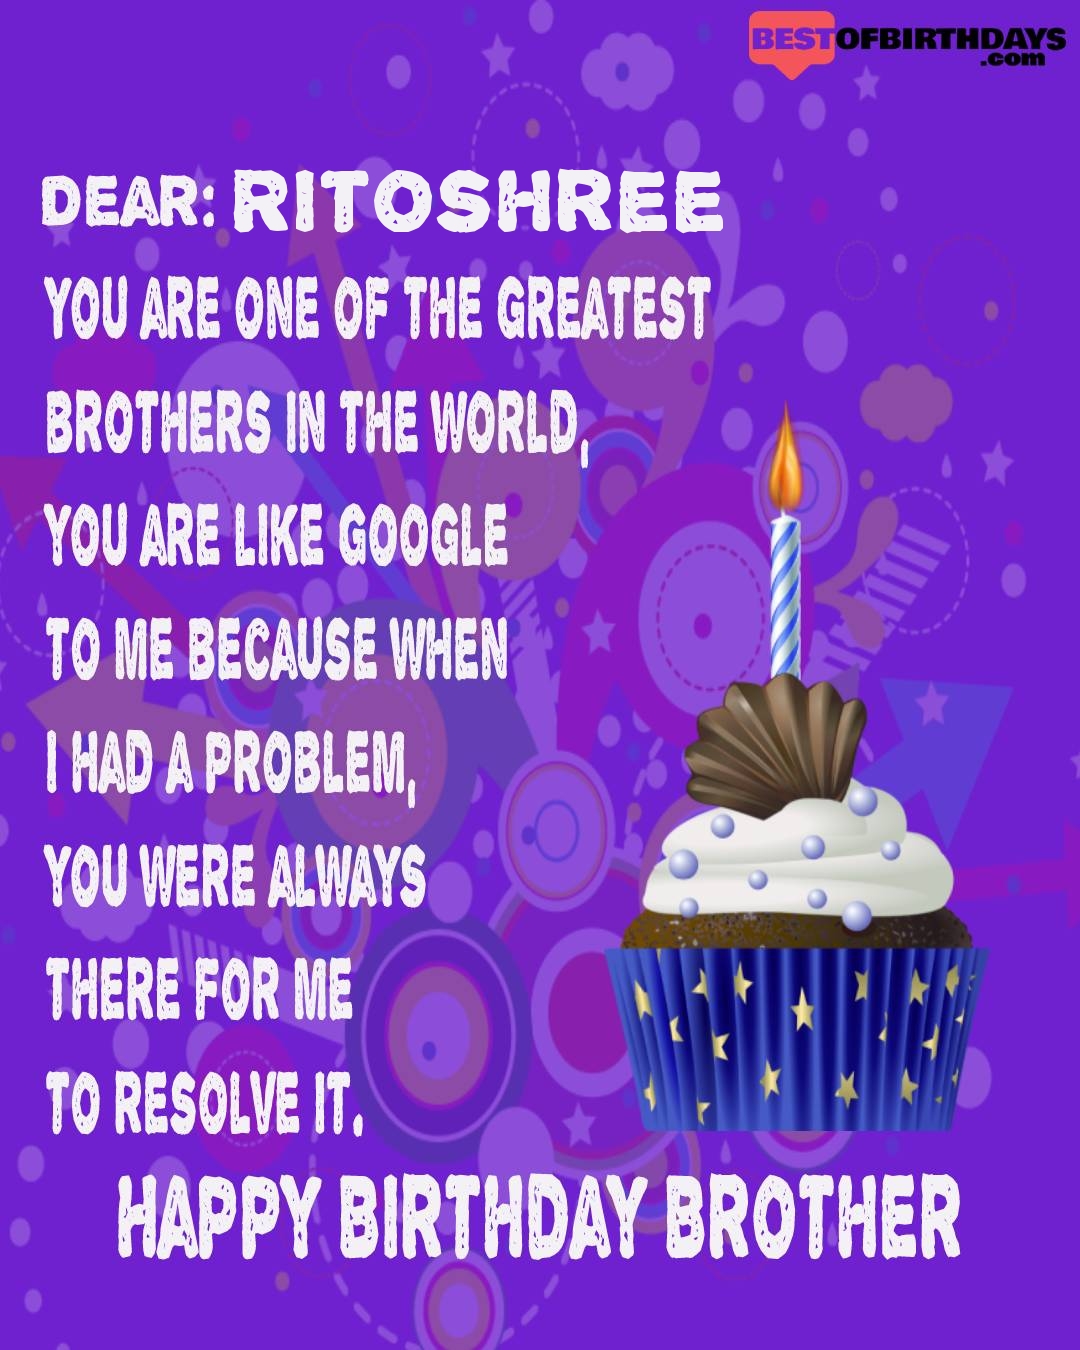 Happy birthday ritoshree bhai brother bro